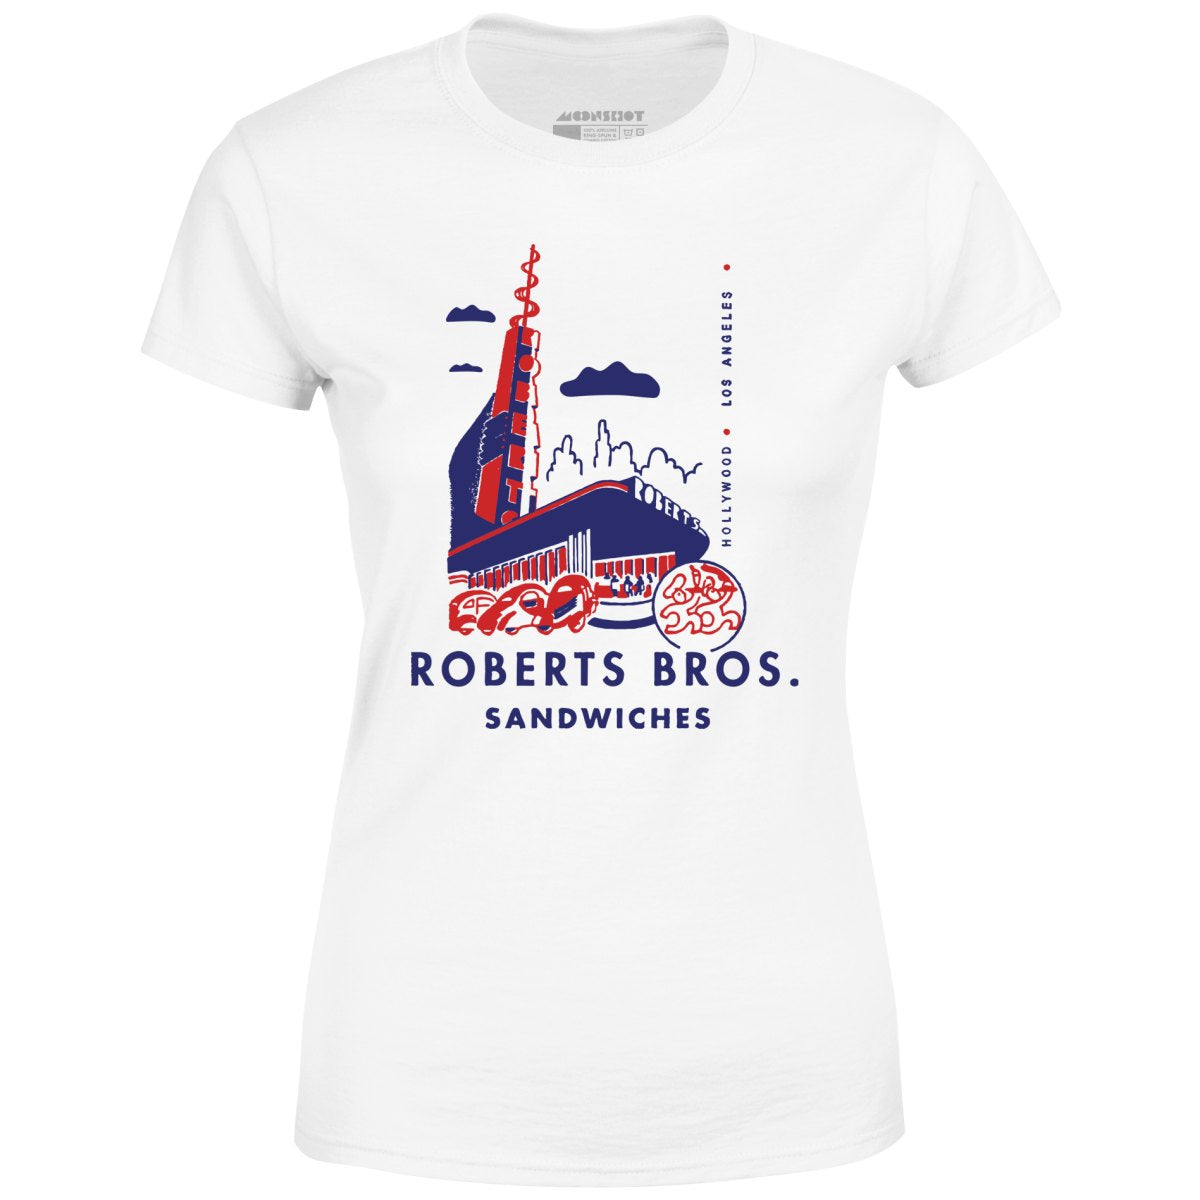 Roberts Bros Sandwiches - Los Angeles, CA - Vintage Restaurant - Women's T-Shirt